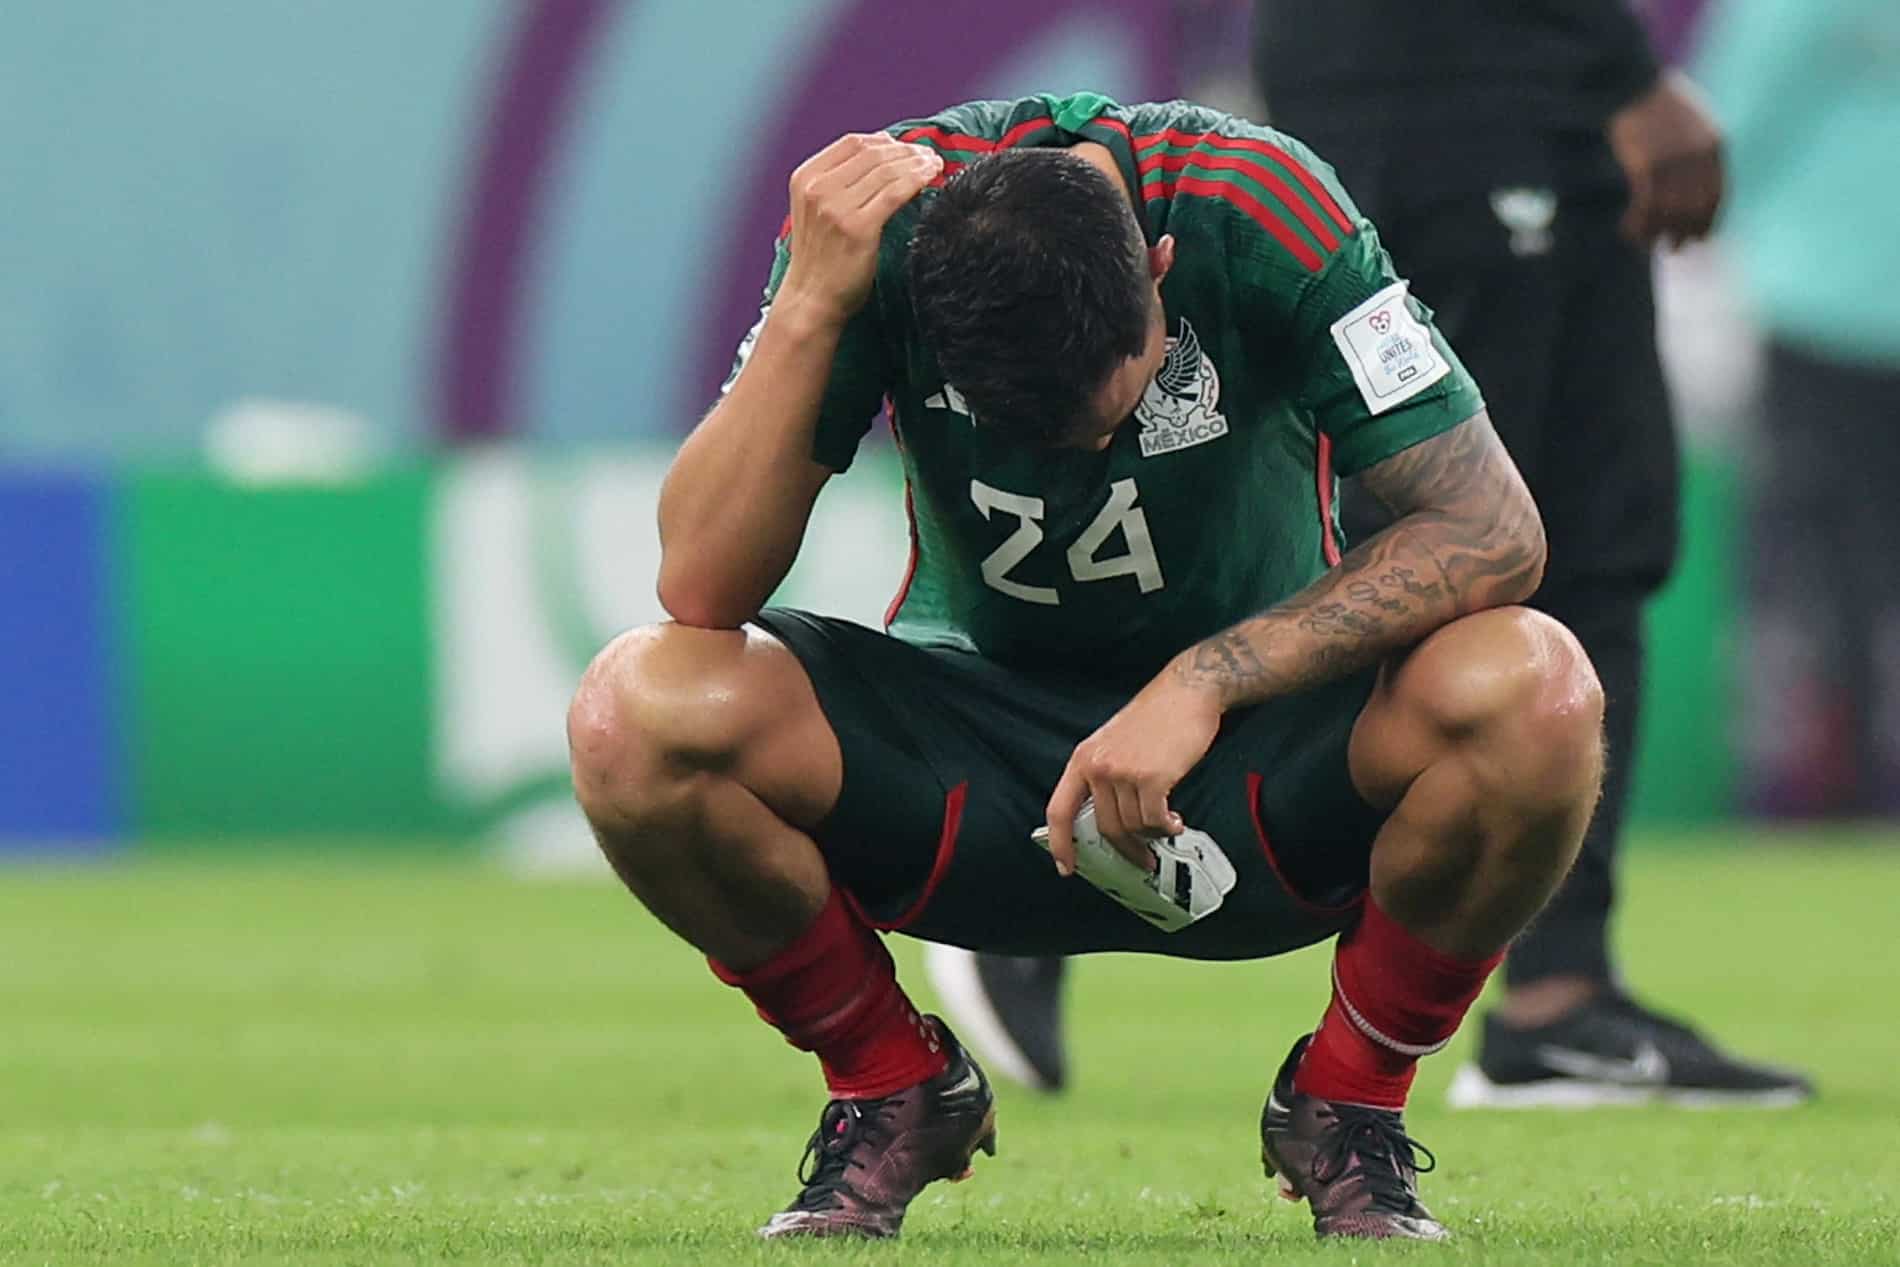 David Faitelson reacciona ante eliminación de México a octavos de final en Catar: “Fracaso, no hay otra forma de llamarlo”